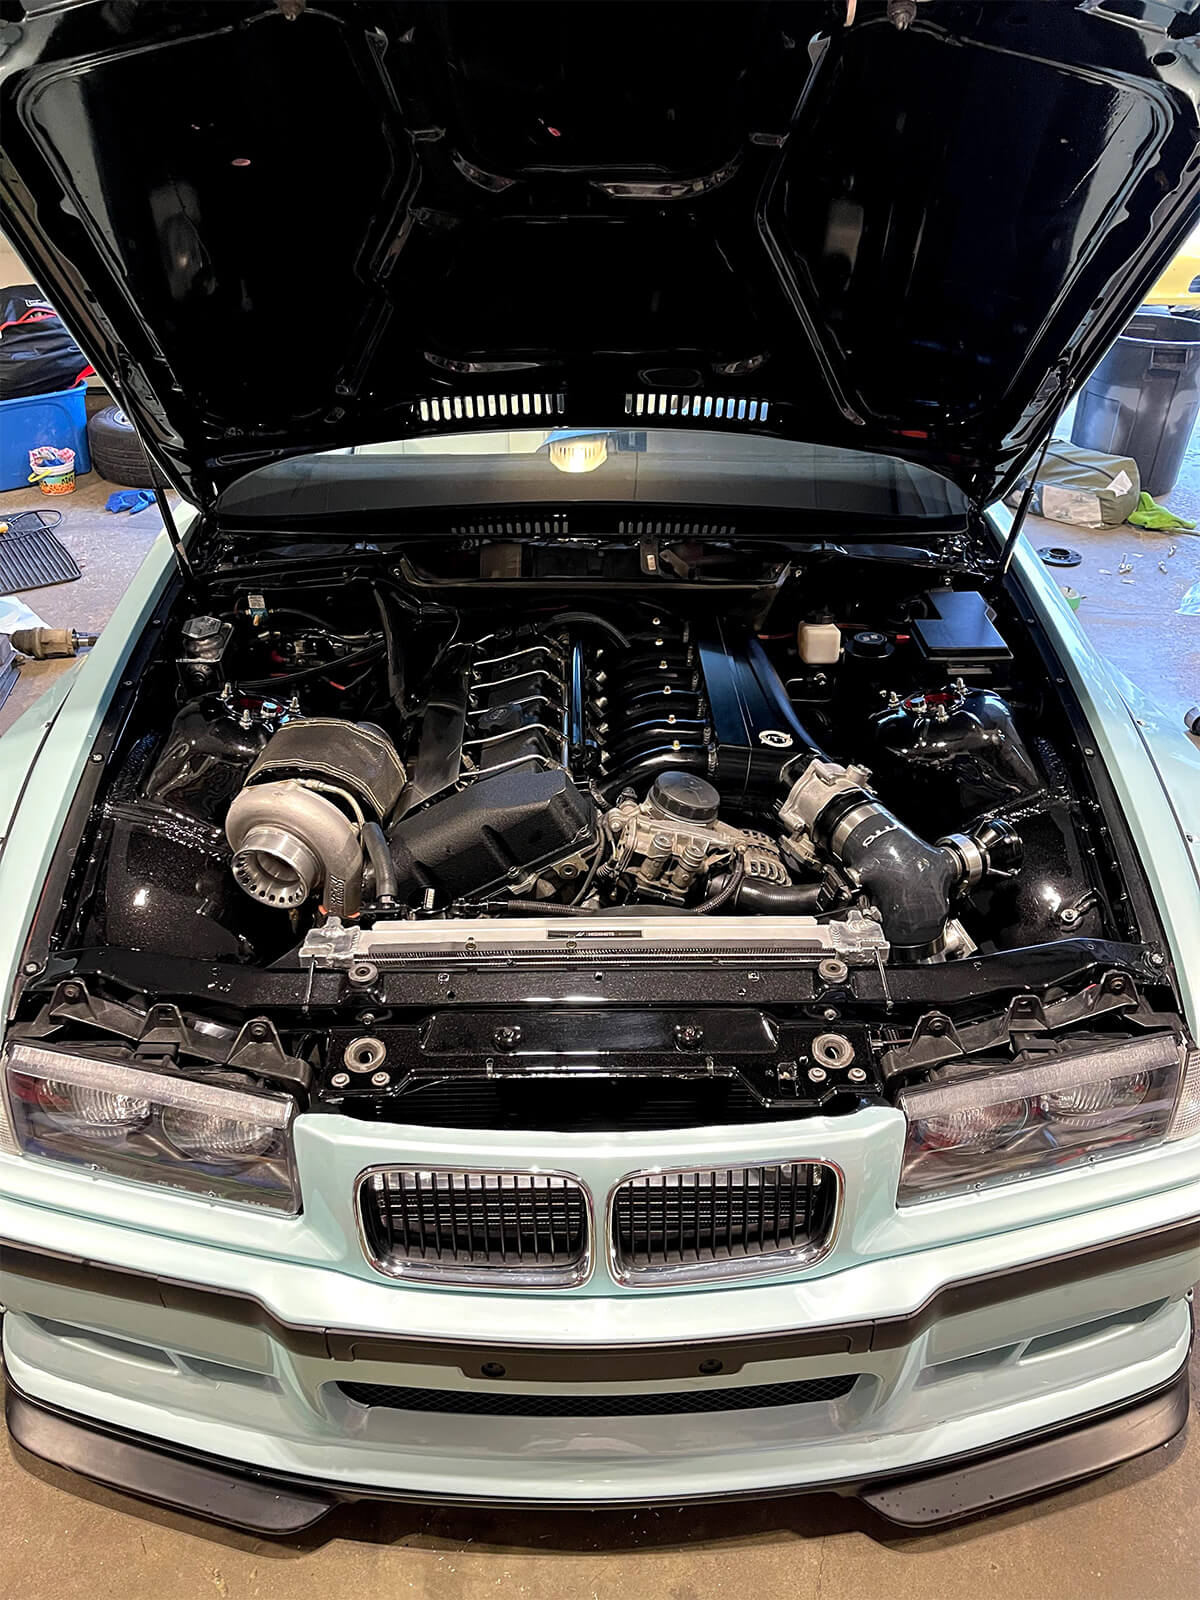 BMW E36 n54 engine swap doc race single turbo kit twin scroll precision 6266